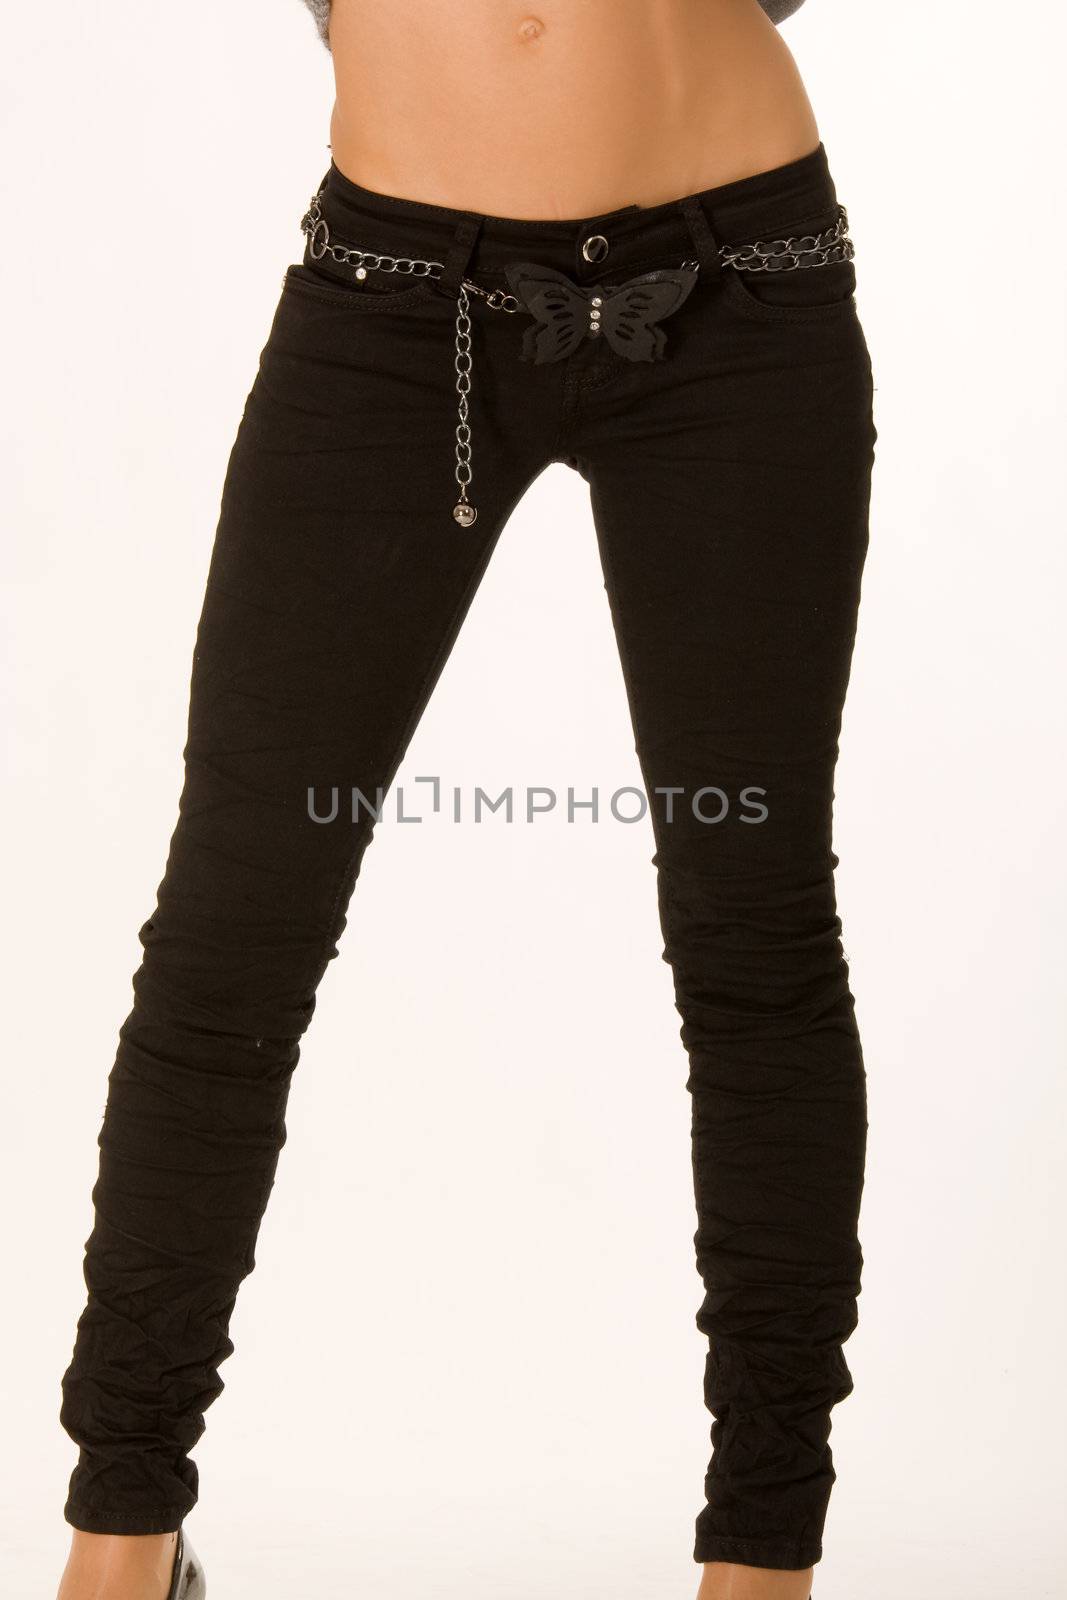 black Jeans by STphotography